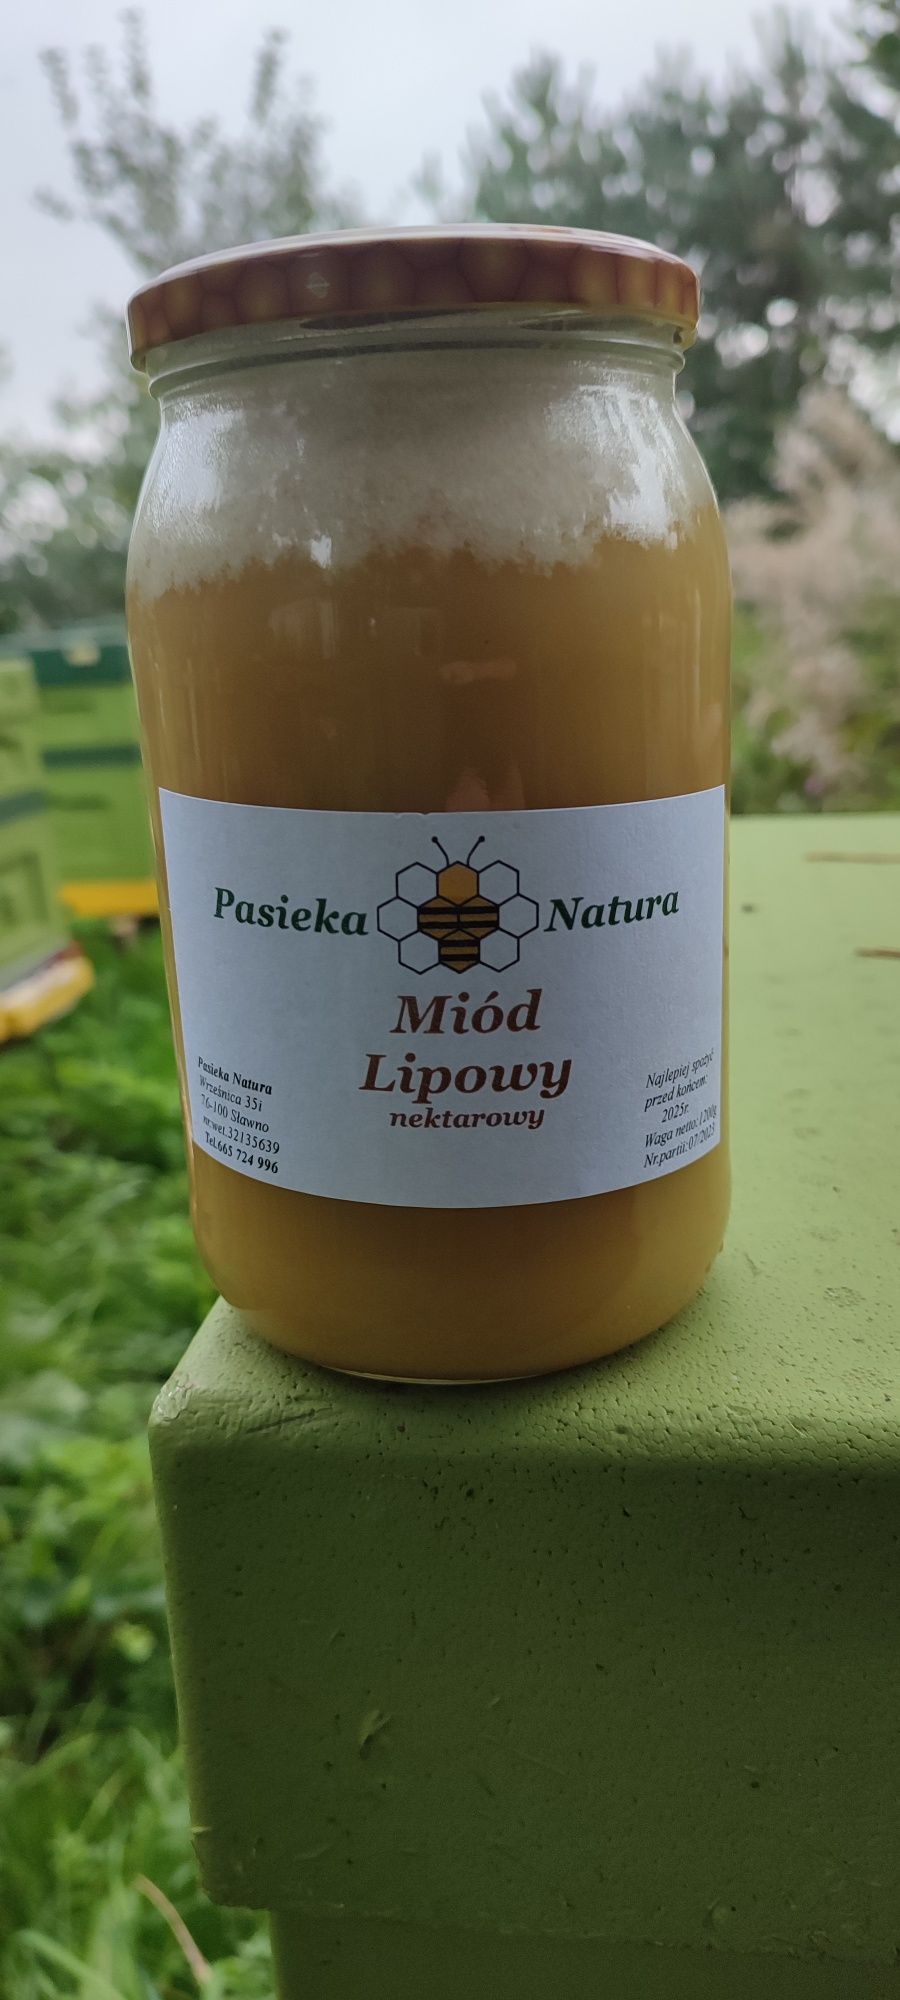 Naturalny miód pszczeli "Pasieka Natura"